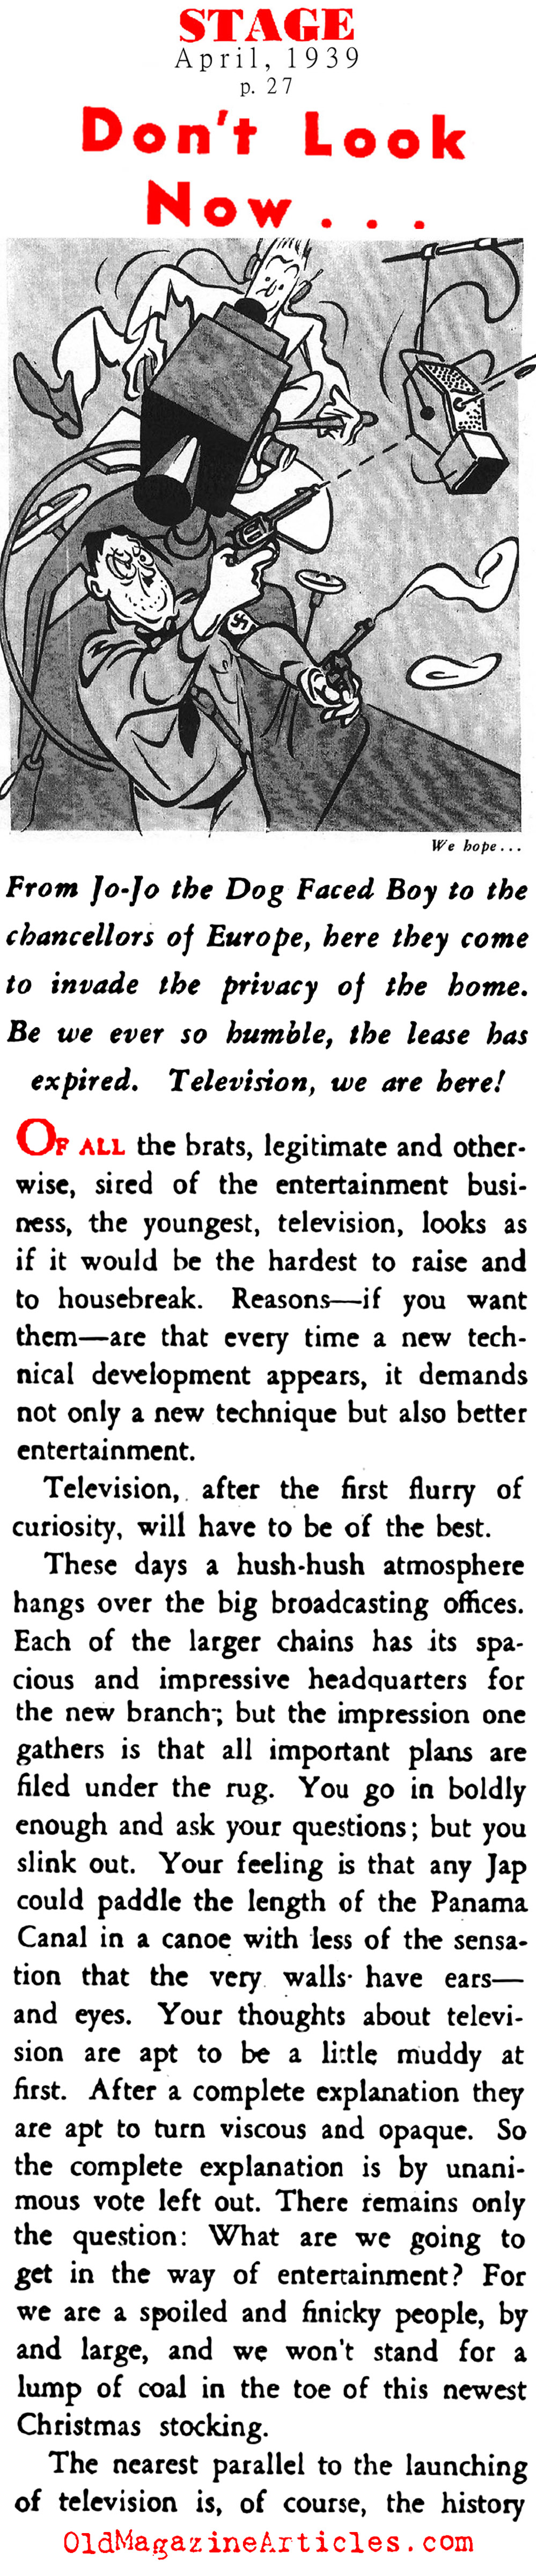 Anticipating the Television Juggernaut  (Stage Magazine, 1939)